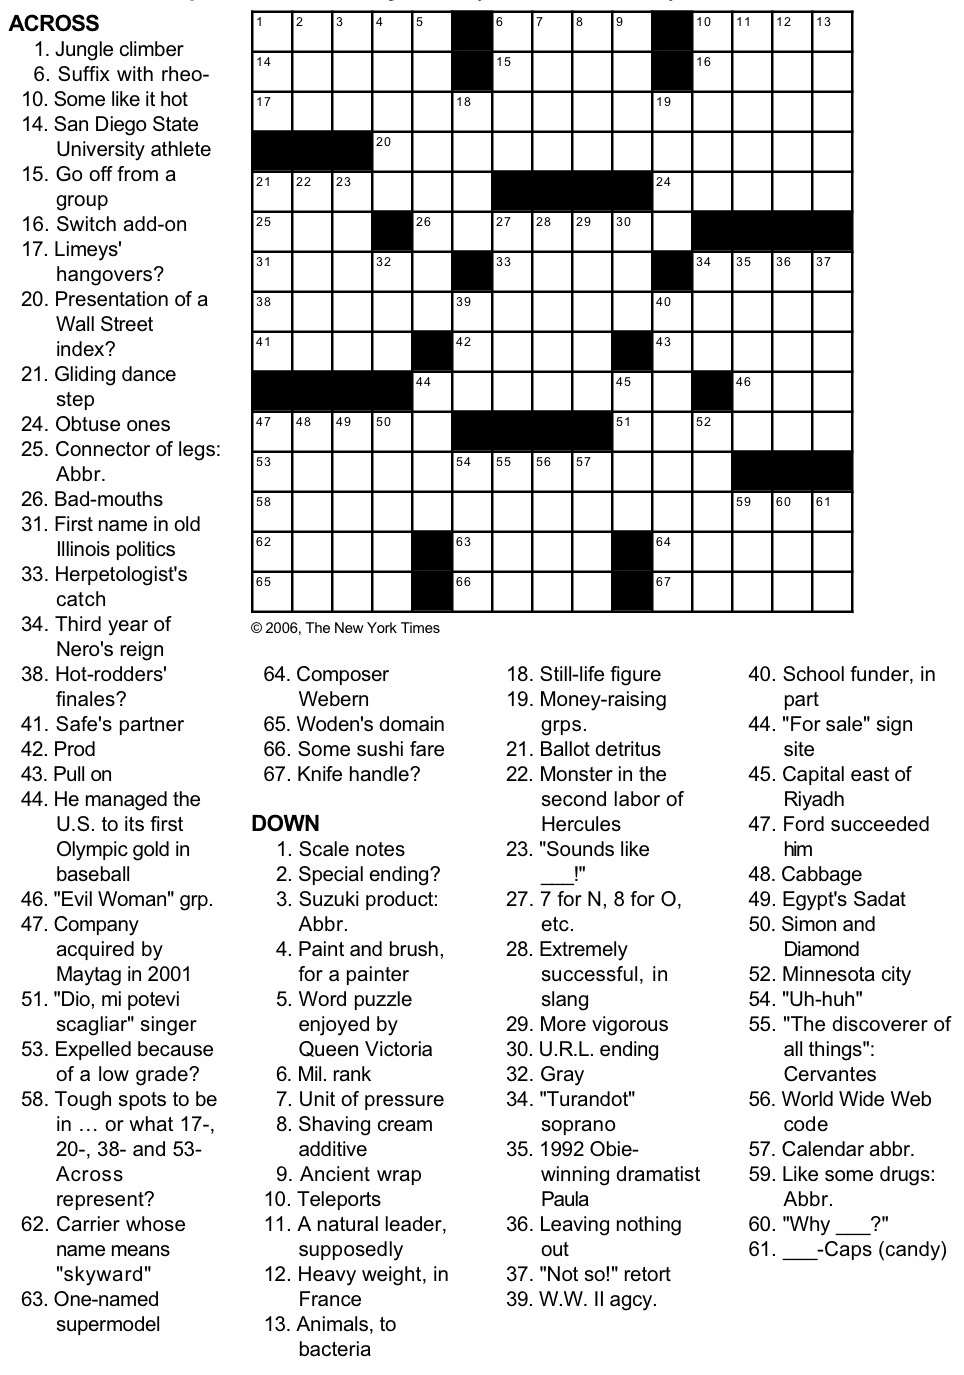 New York Times Crossword Puzzle Online glynnzet | Peatix